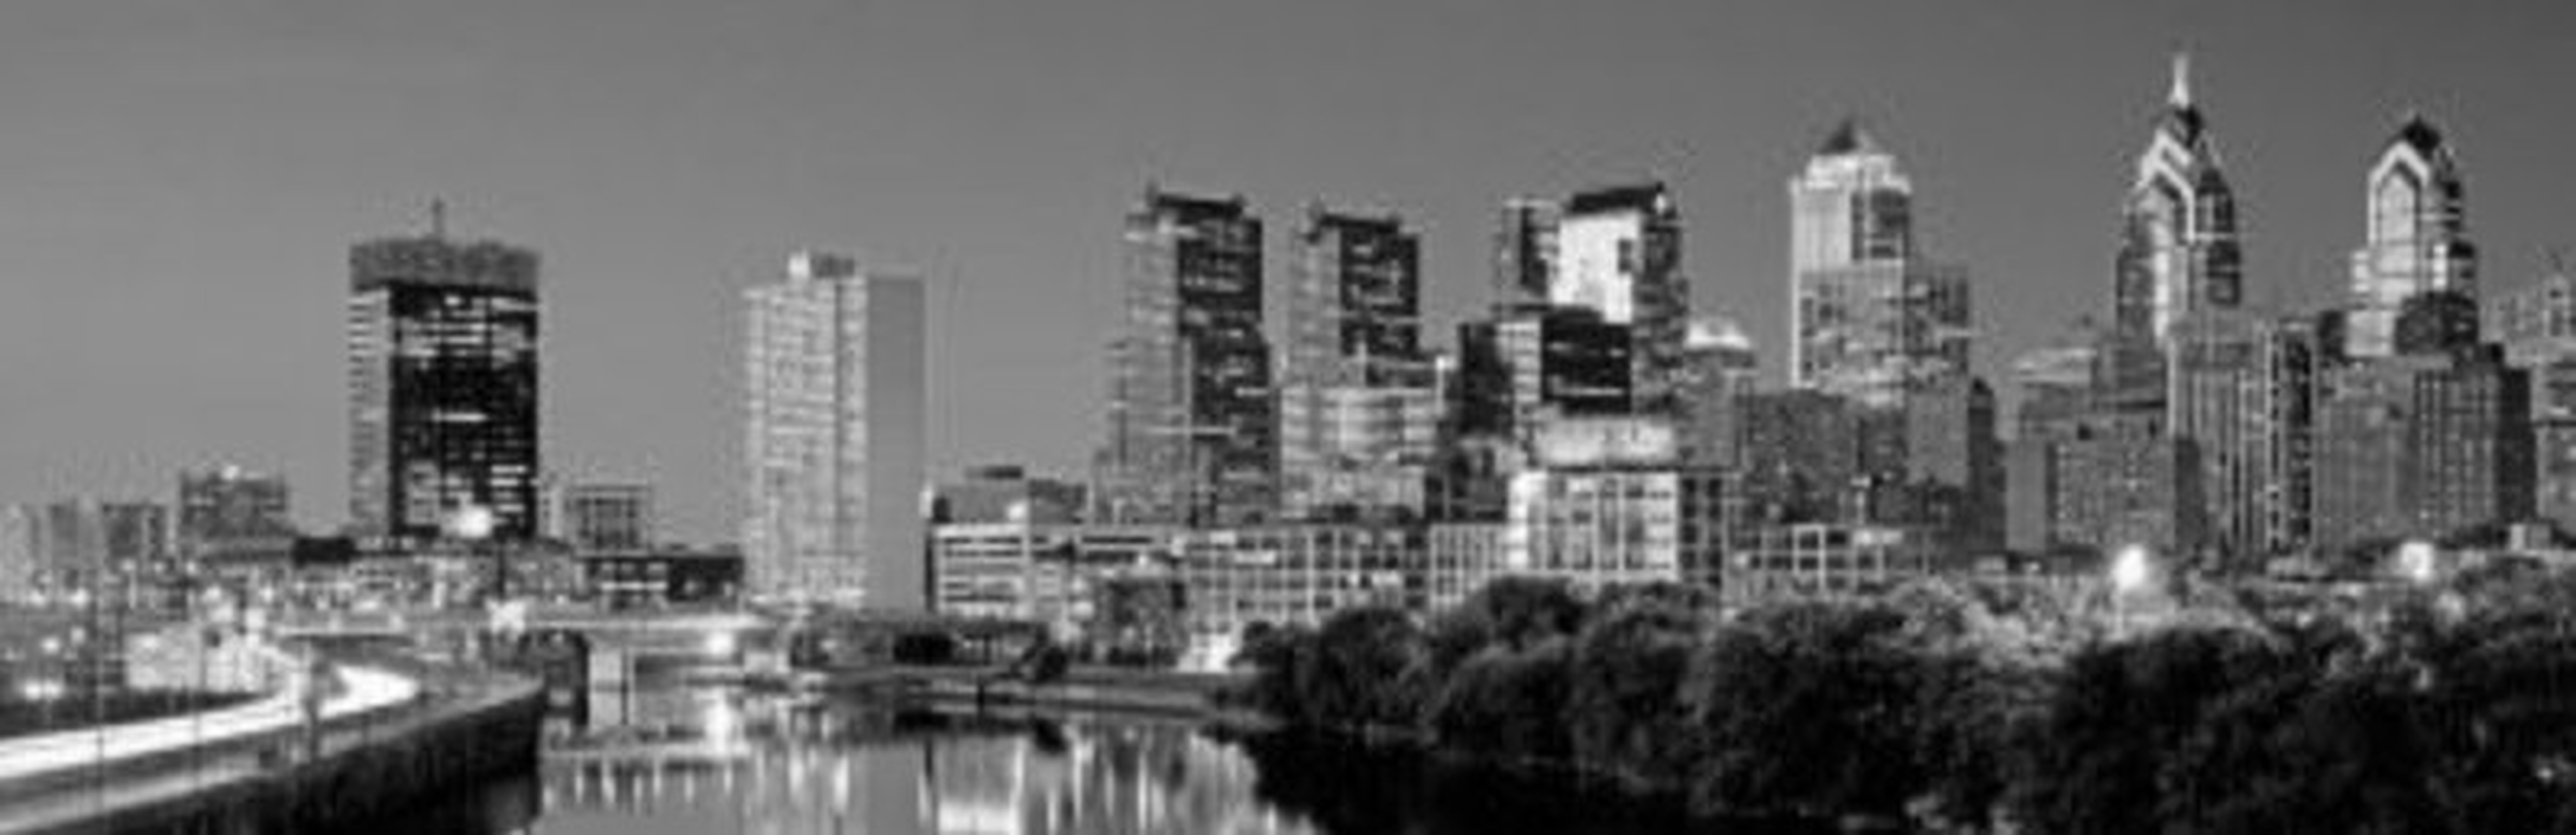 Panoramic U.S. Pennsylvania, Philadelphia Skyline, Night Photographic Print on Canvas in Black and White - Wayfair